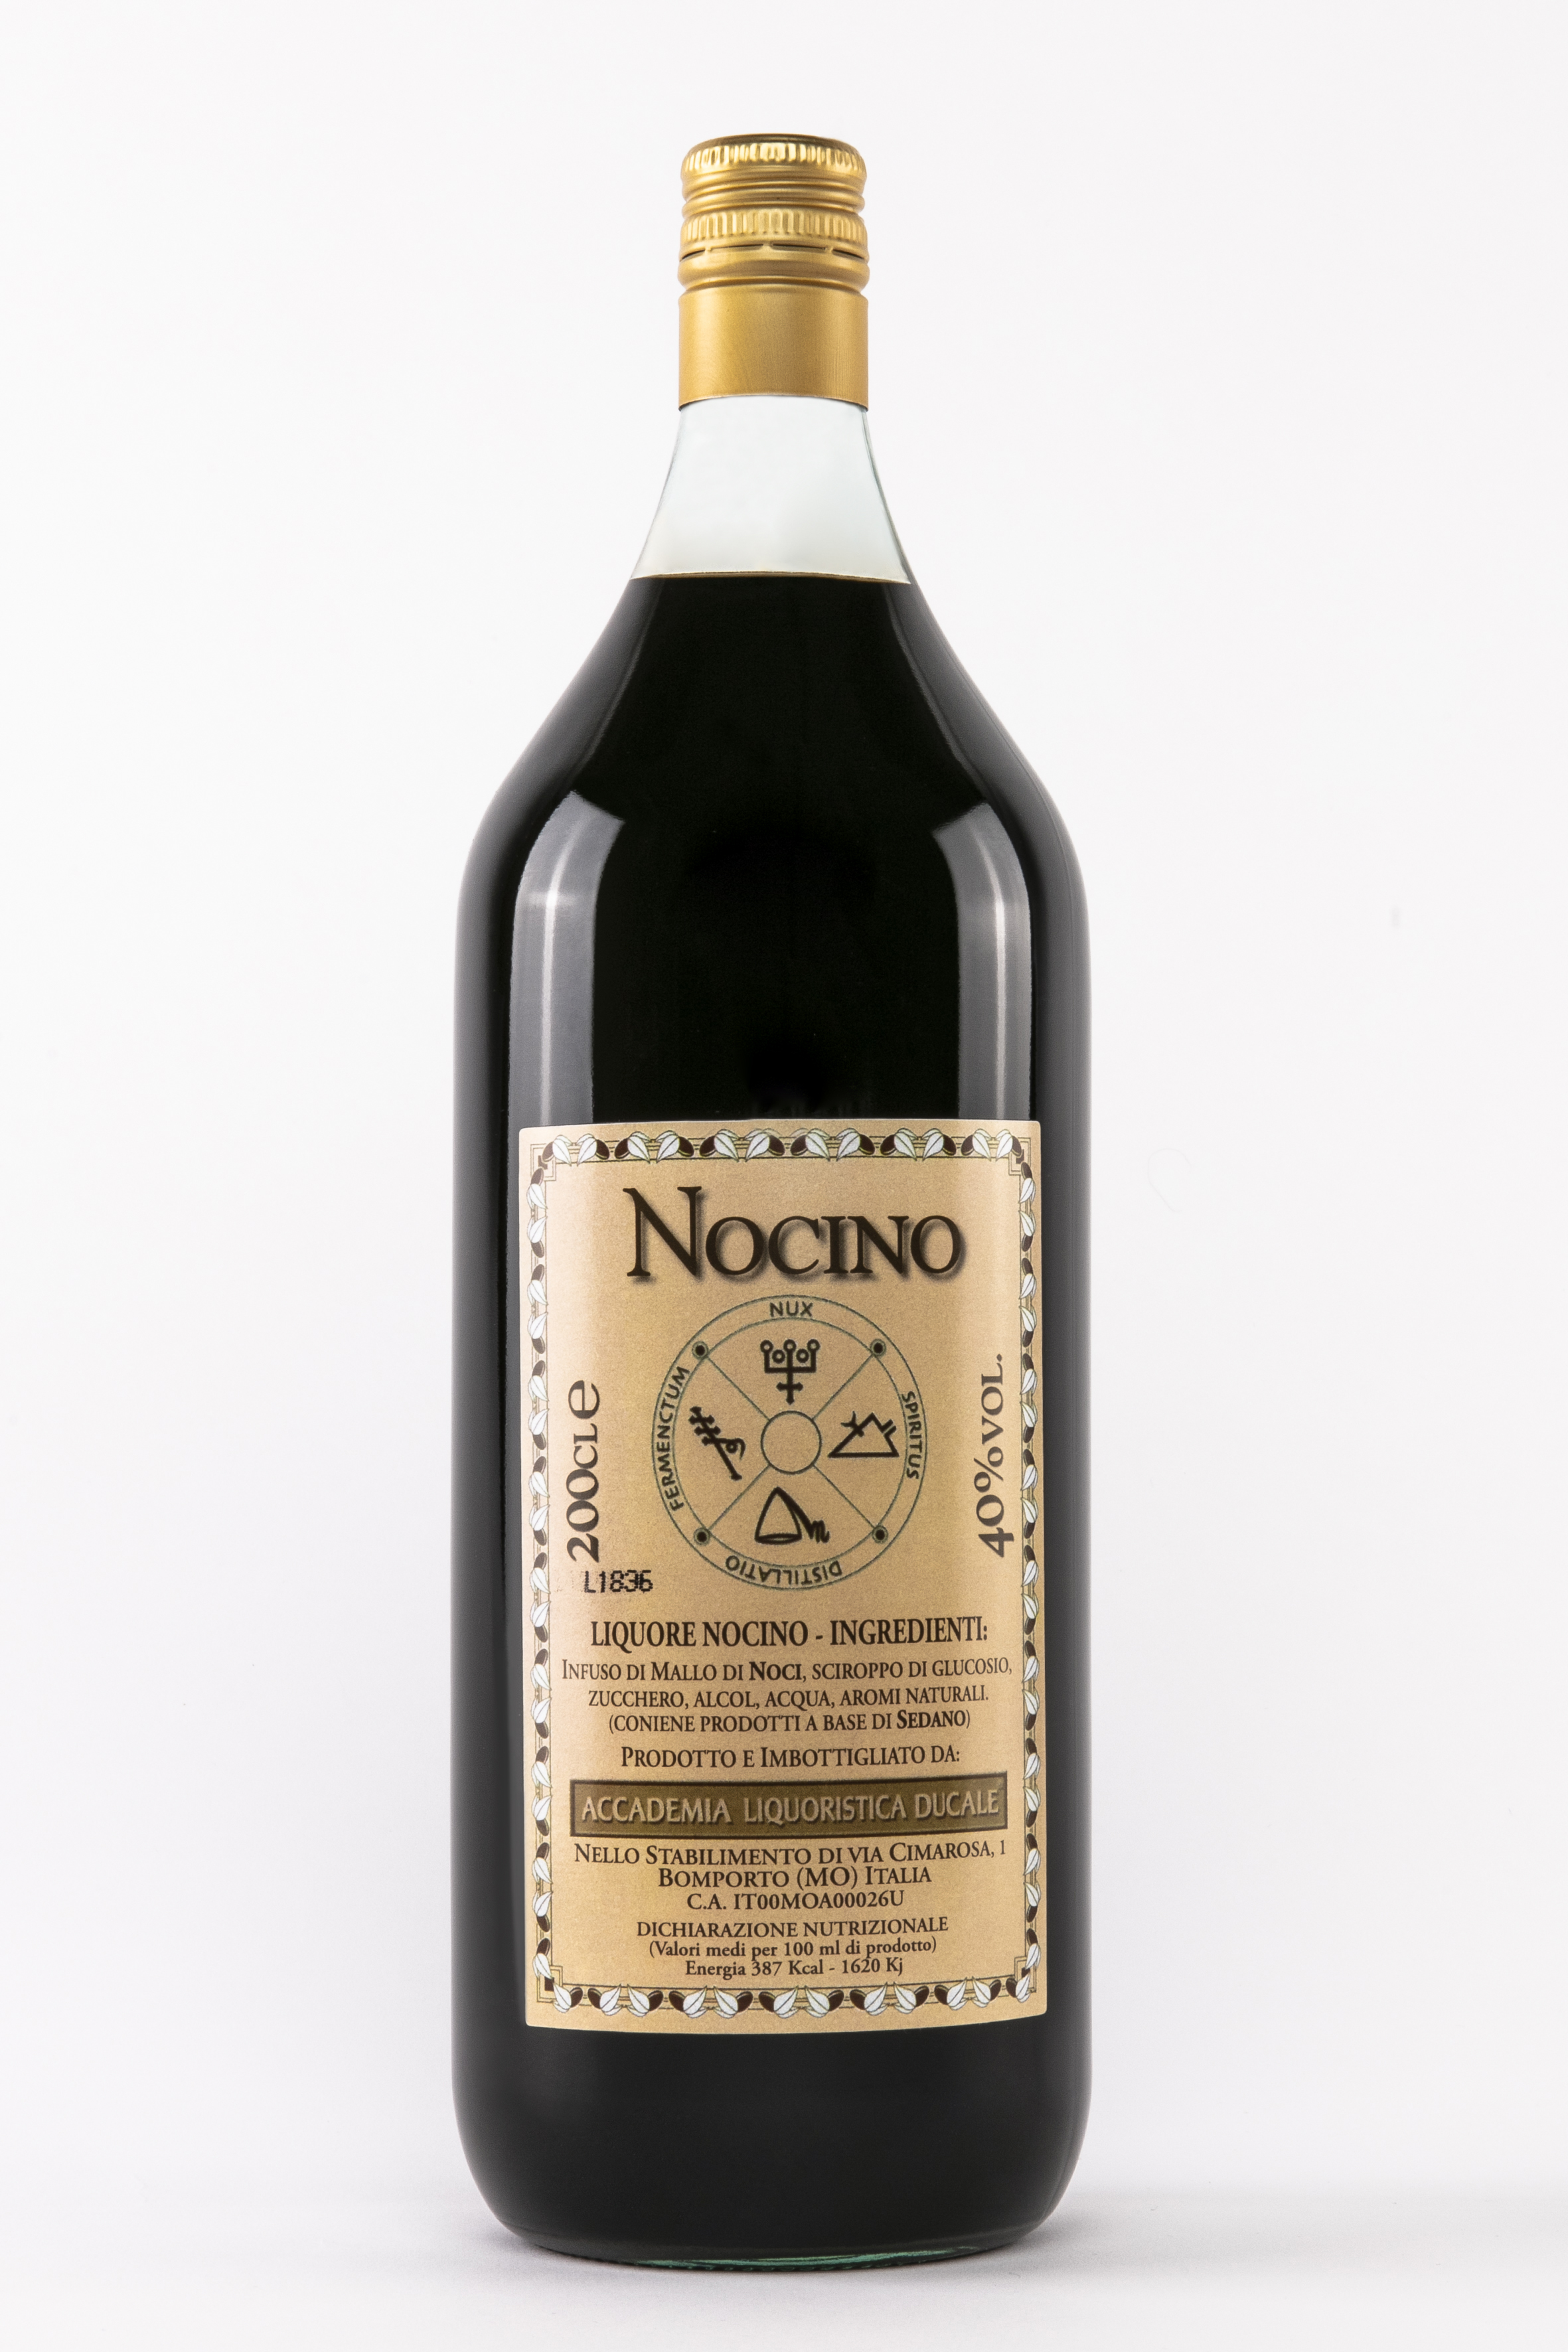 – NOCE Gavioli Distilleria NOCINO 2 LT GRAN